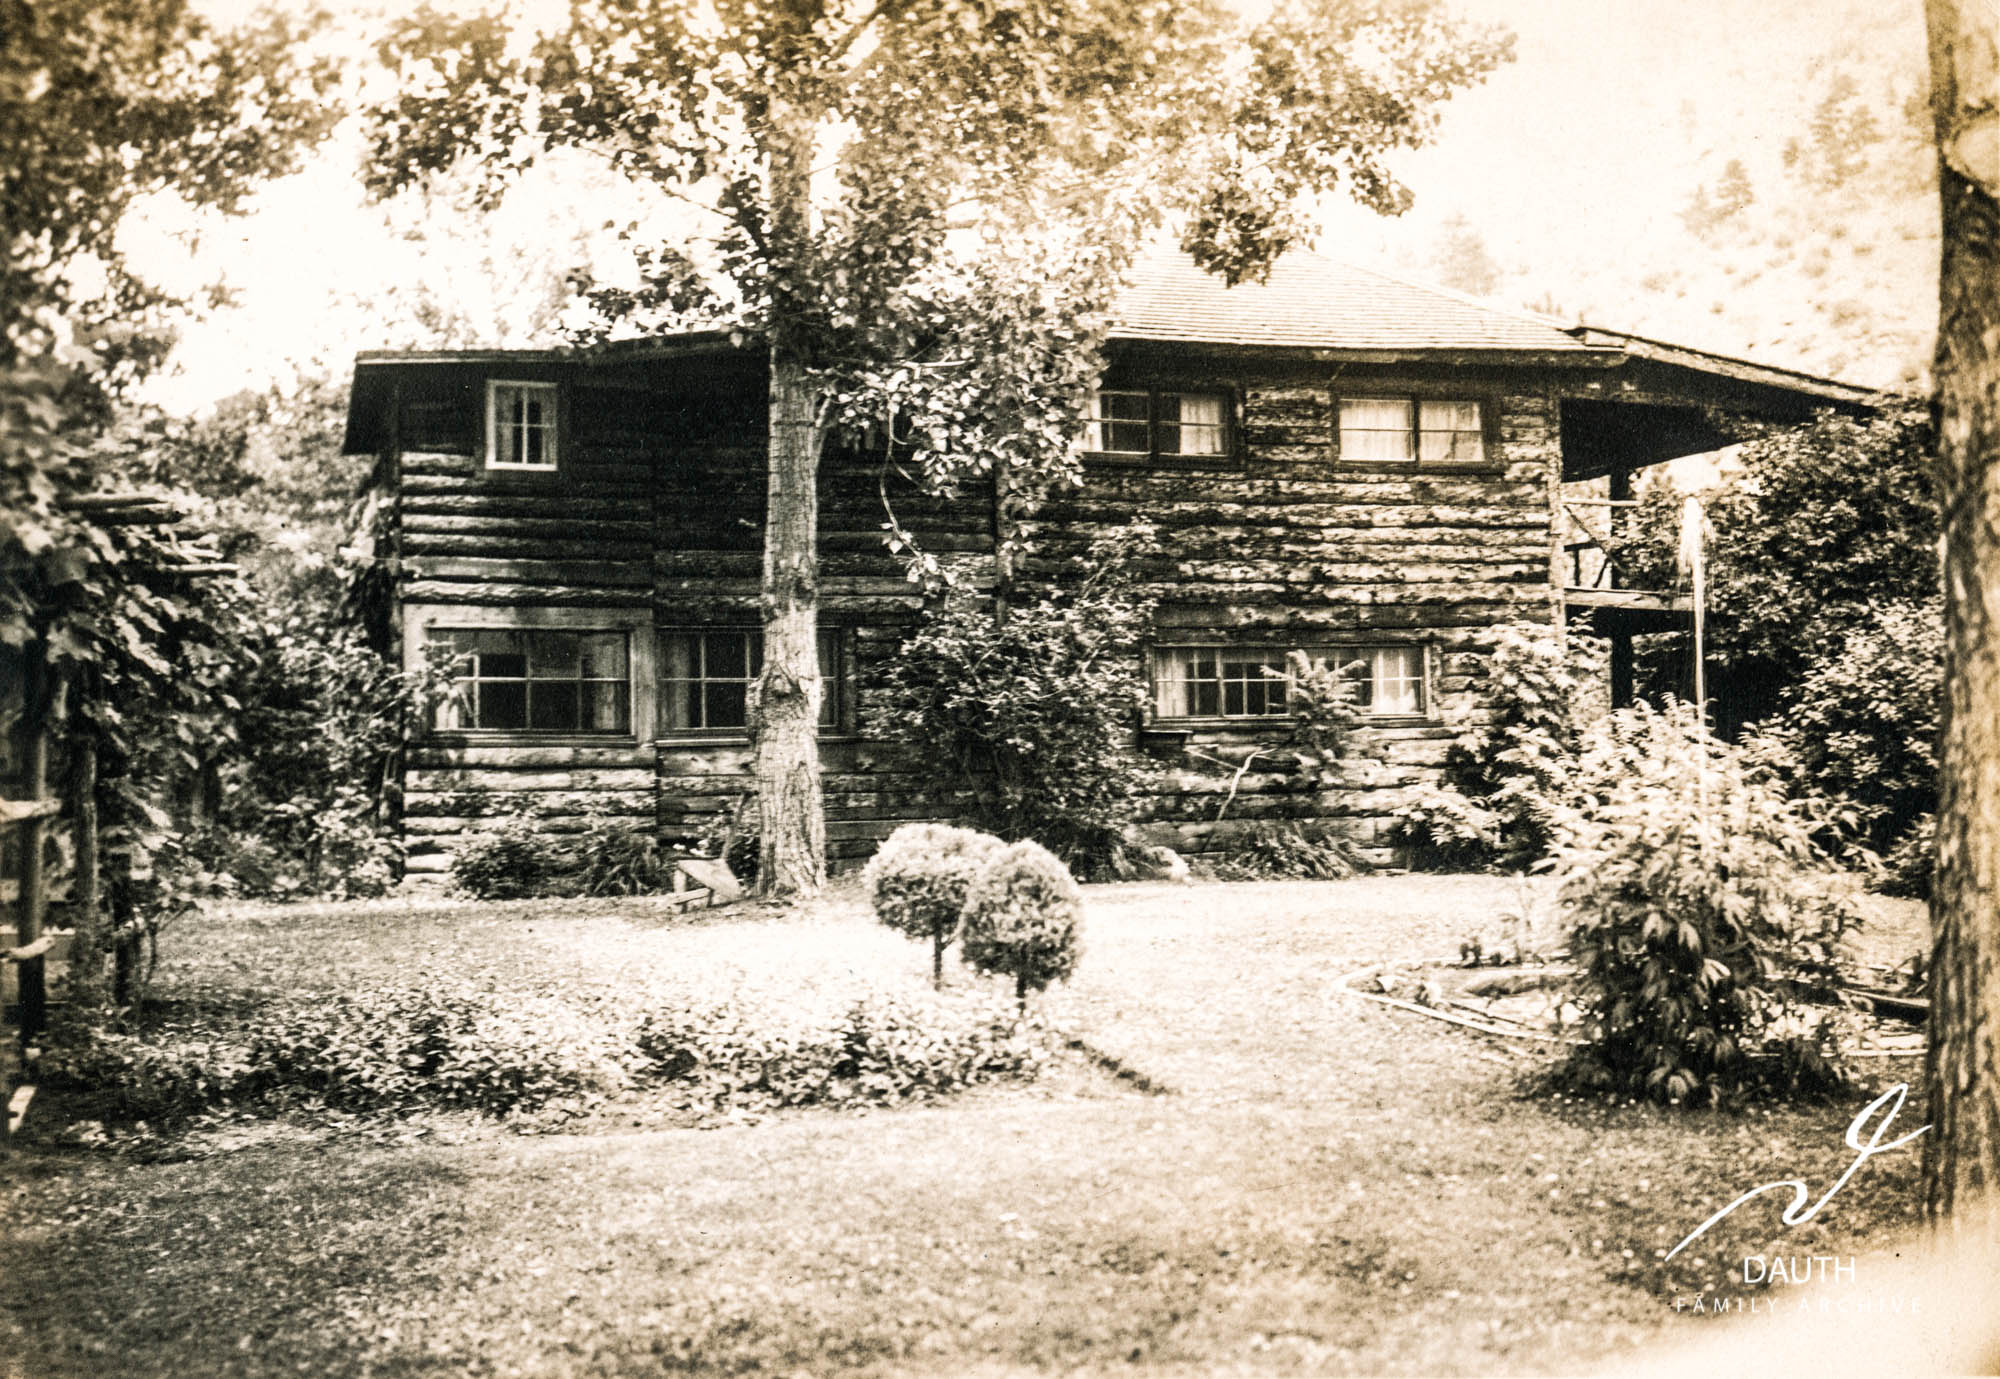 Idlewild Lodge - idlewildlodge.github.io - Circa 1930s - Idlewild Lodge Secret Gardens